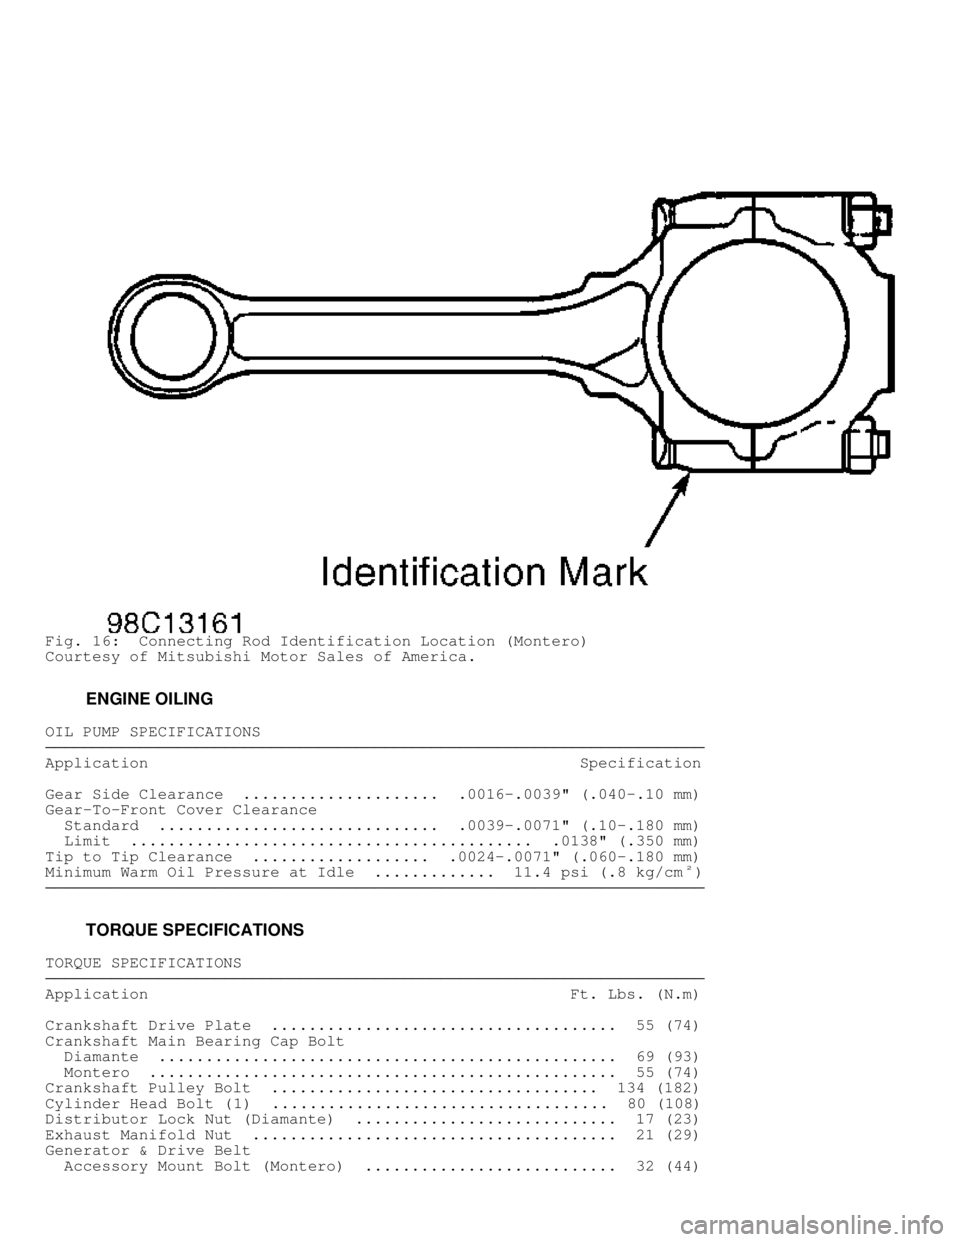 MITSUBISHI MONTERO 1998  Service Manual Fig. 16:  Connecting Rod Identification Location (Montero)
Courtesy of Mitsubishi Motor Sales of America.
         ENGINE OILING
OIL PUMP SPECIFICATIONS\
\
